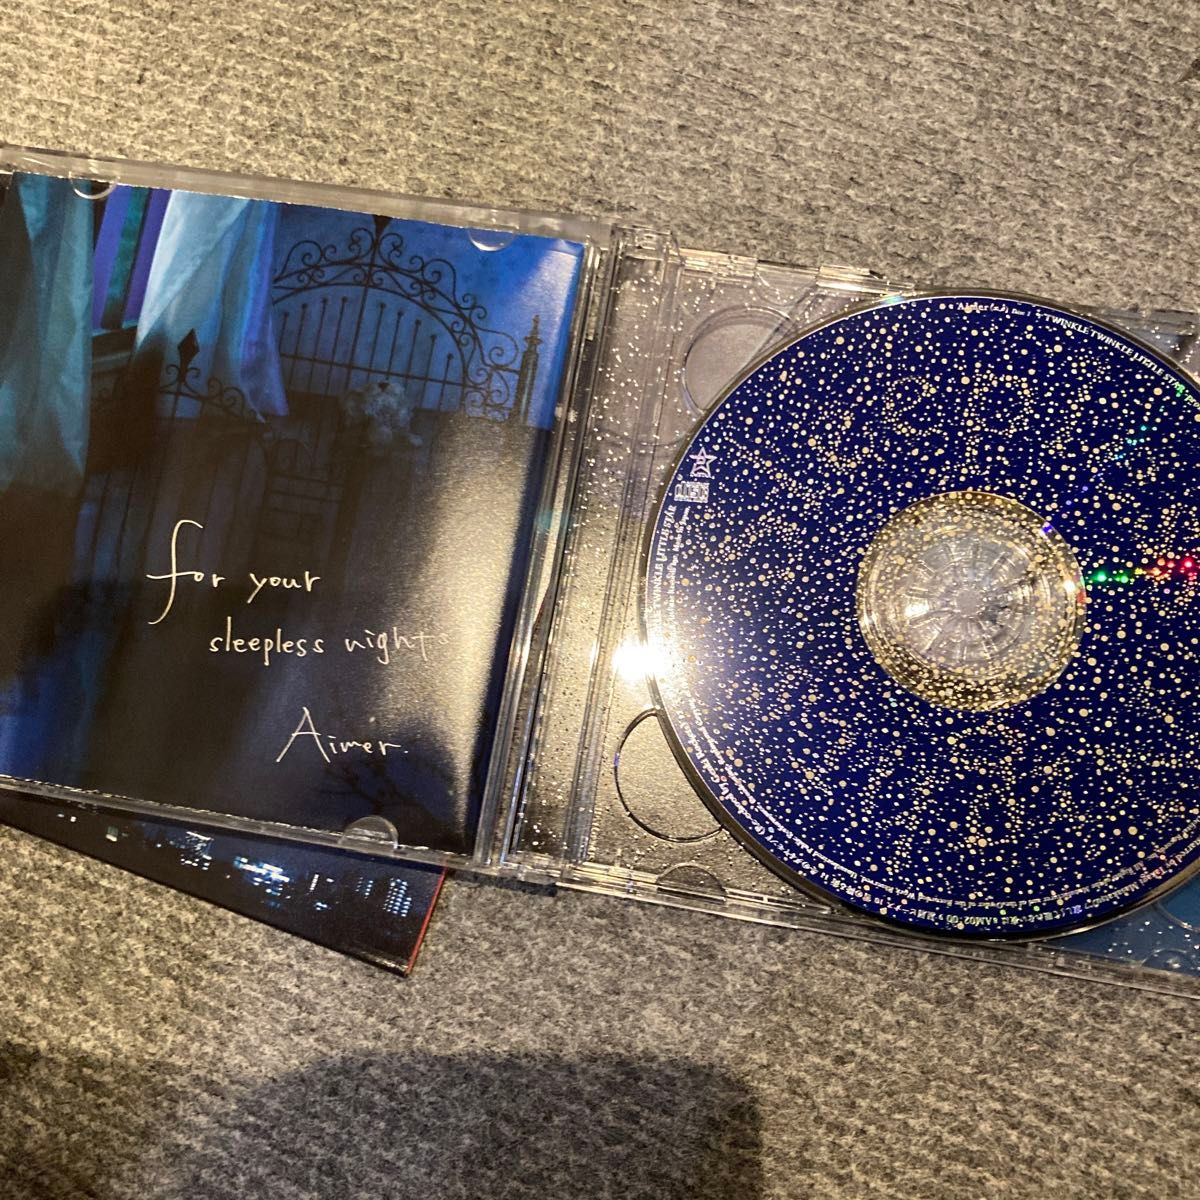 Aimer / Sleepless Nights[DVD付初回生産限定盤]